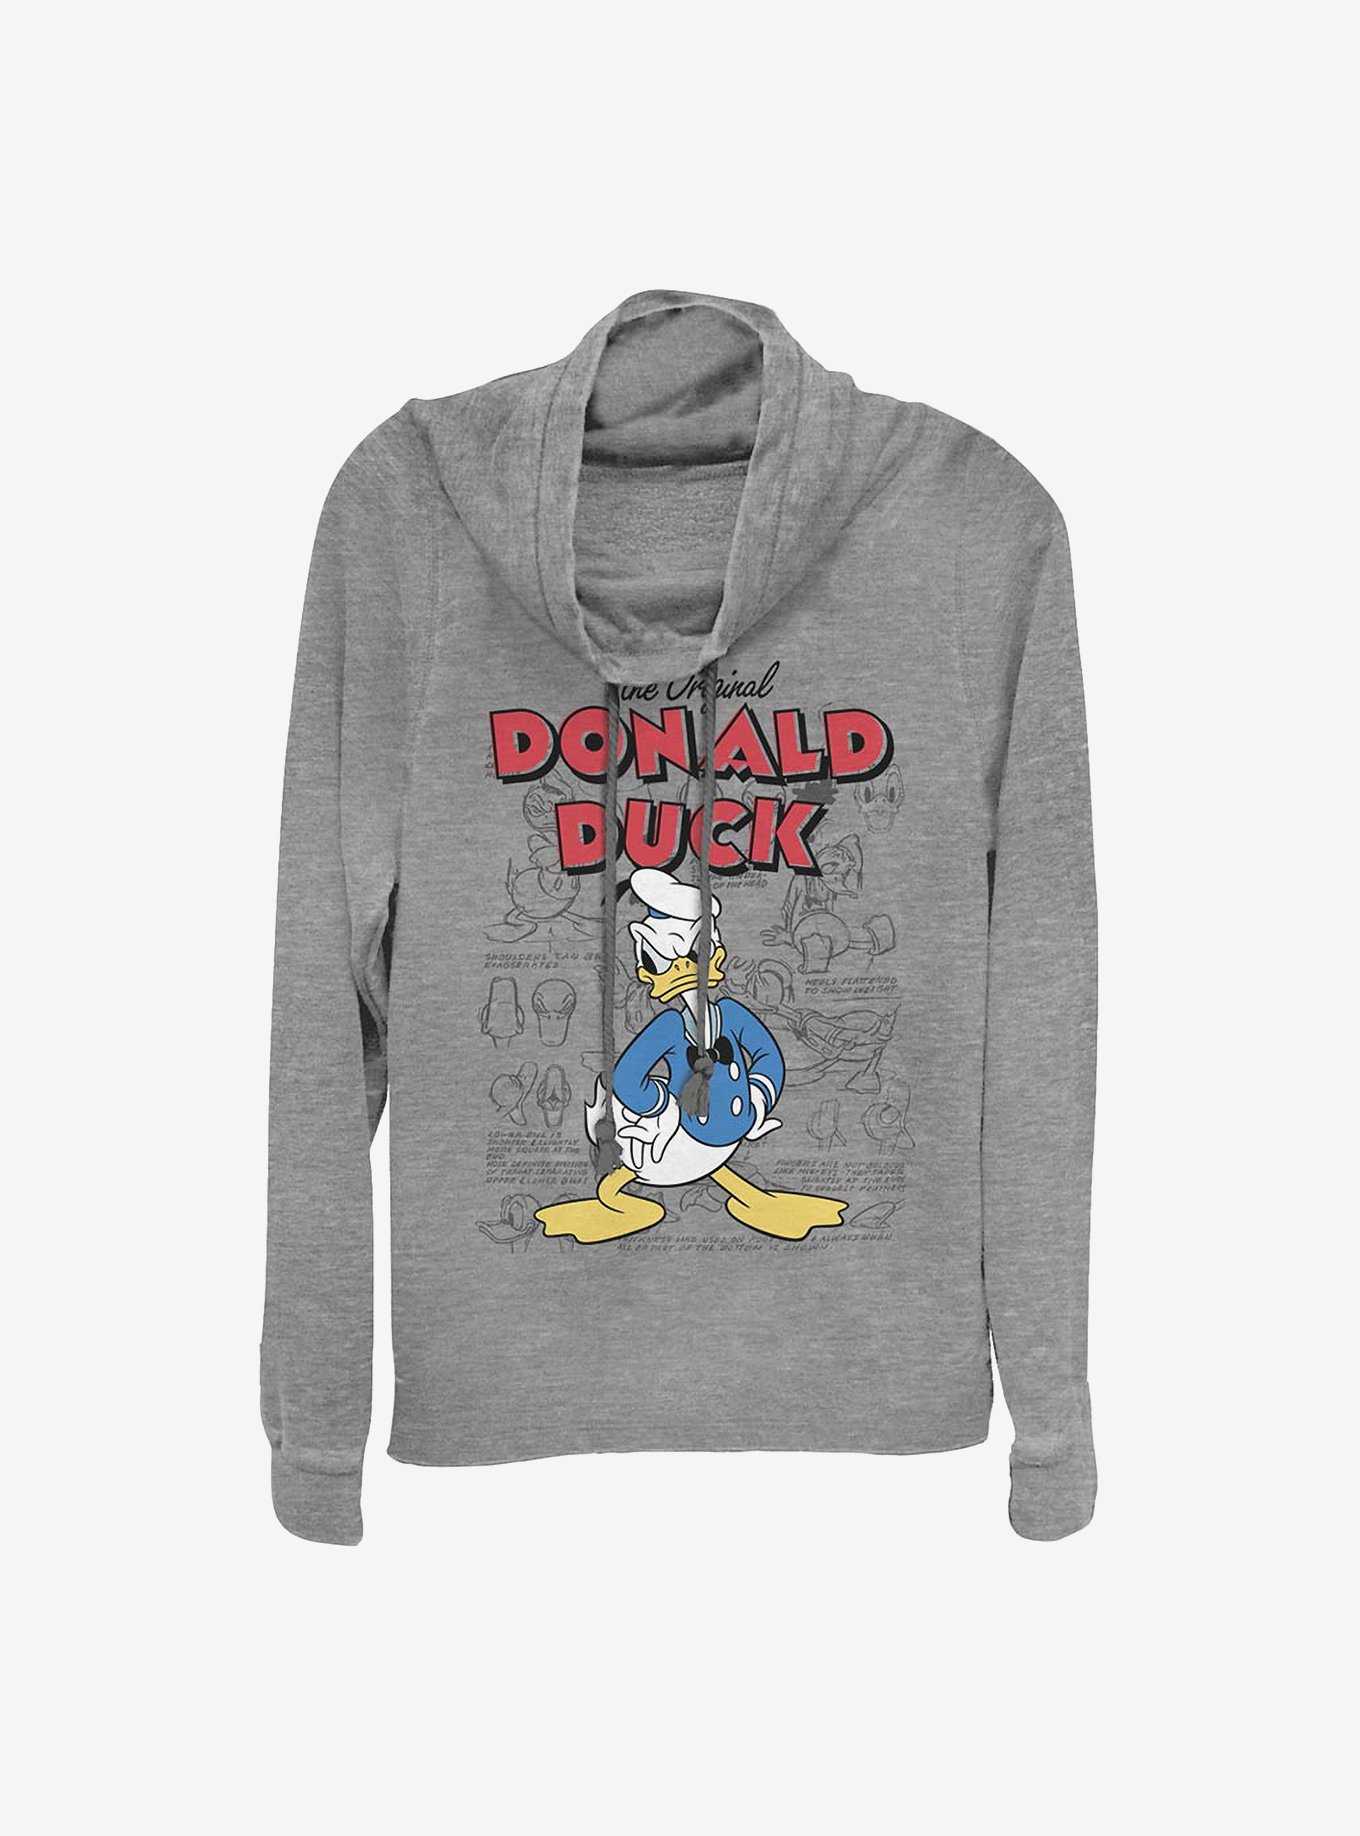 Disney Donald Duck Original Donald Sketchbook Cowlneck Long-Sleeve Girls Top, , hi-res